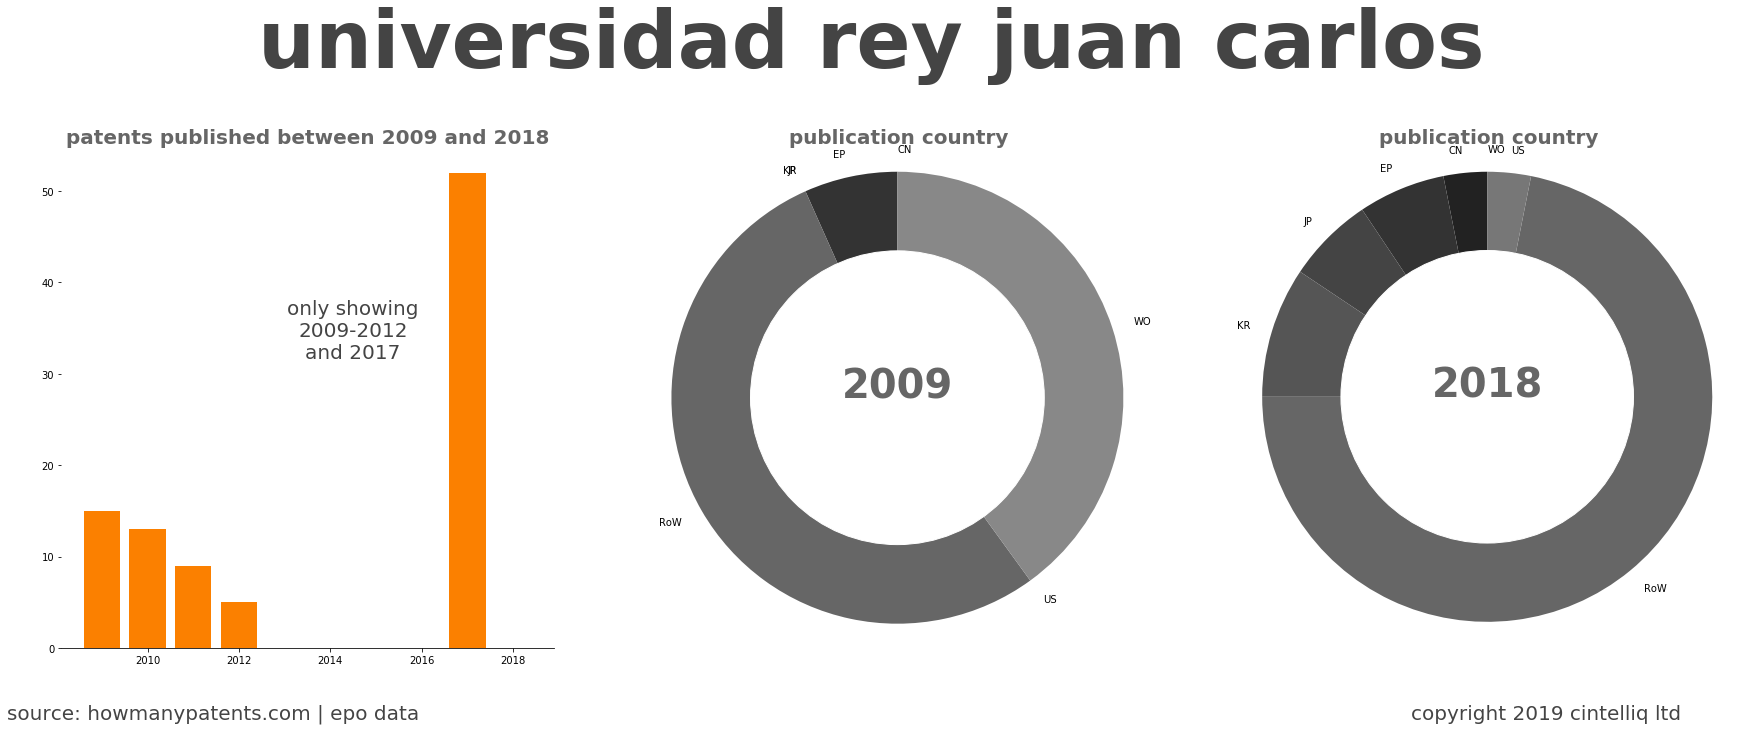 summary of patents for Universidad Rey Juan Carlos